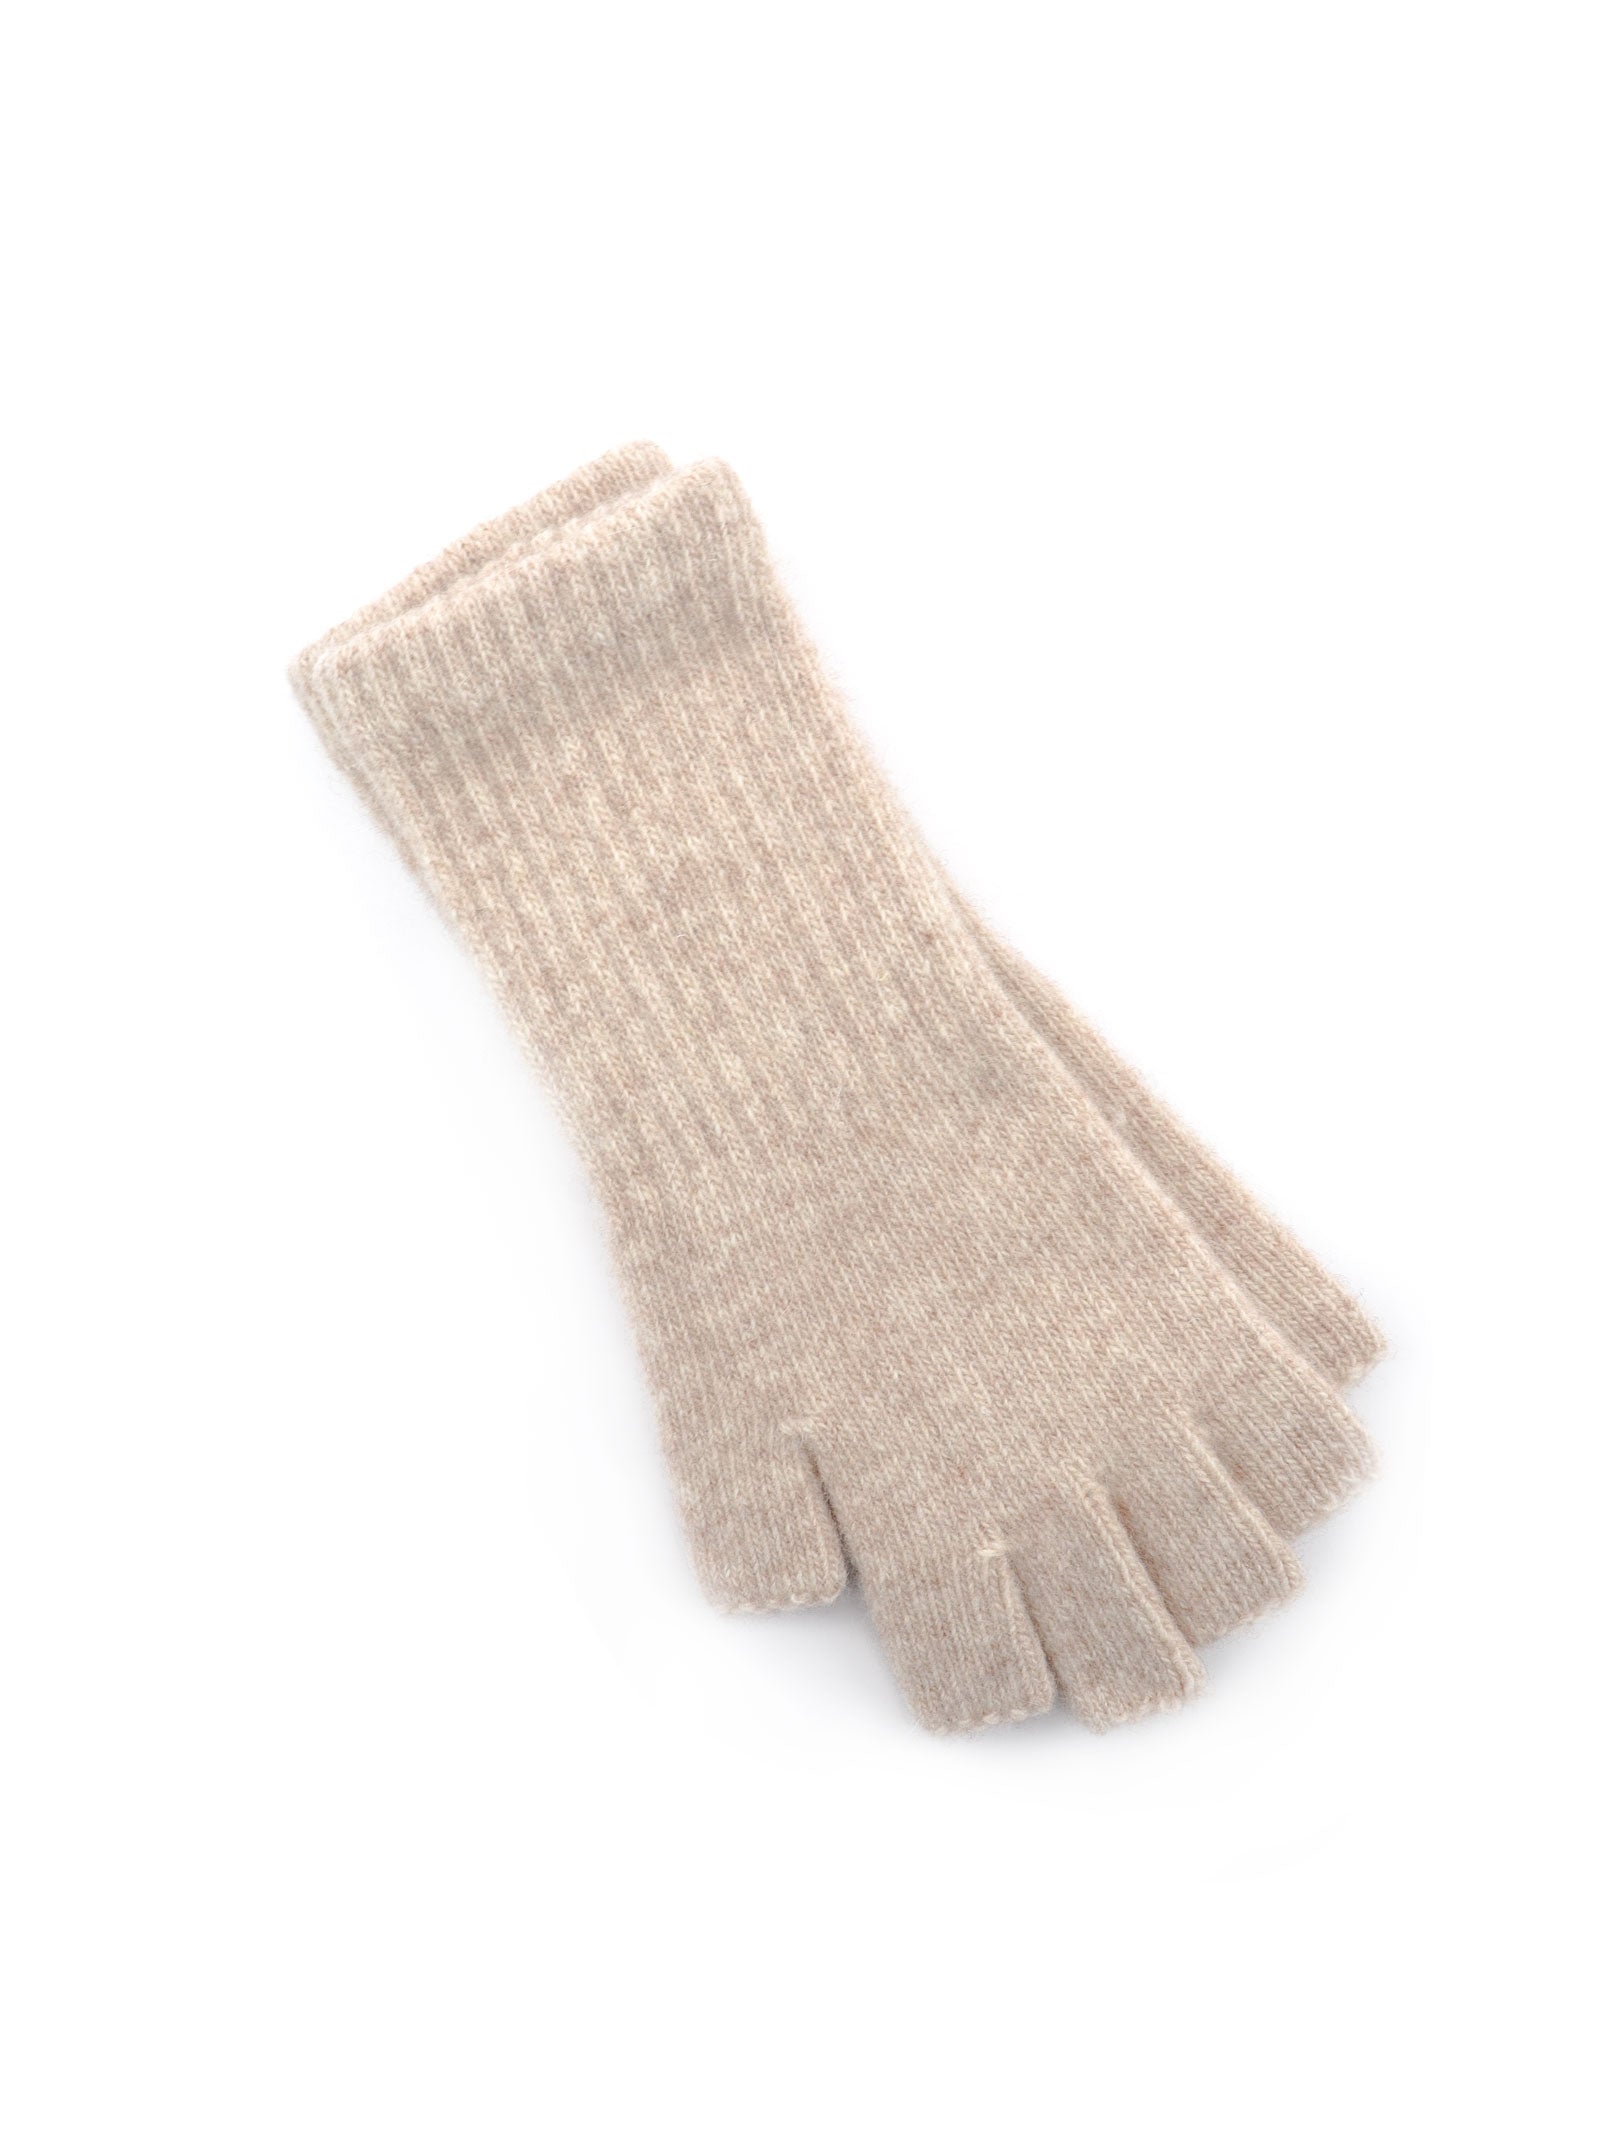 Pheba Fingerless Wool Gloves - Simplique Mode